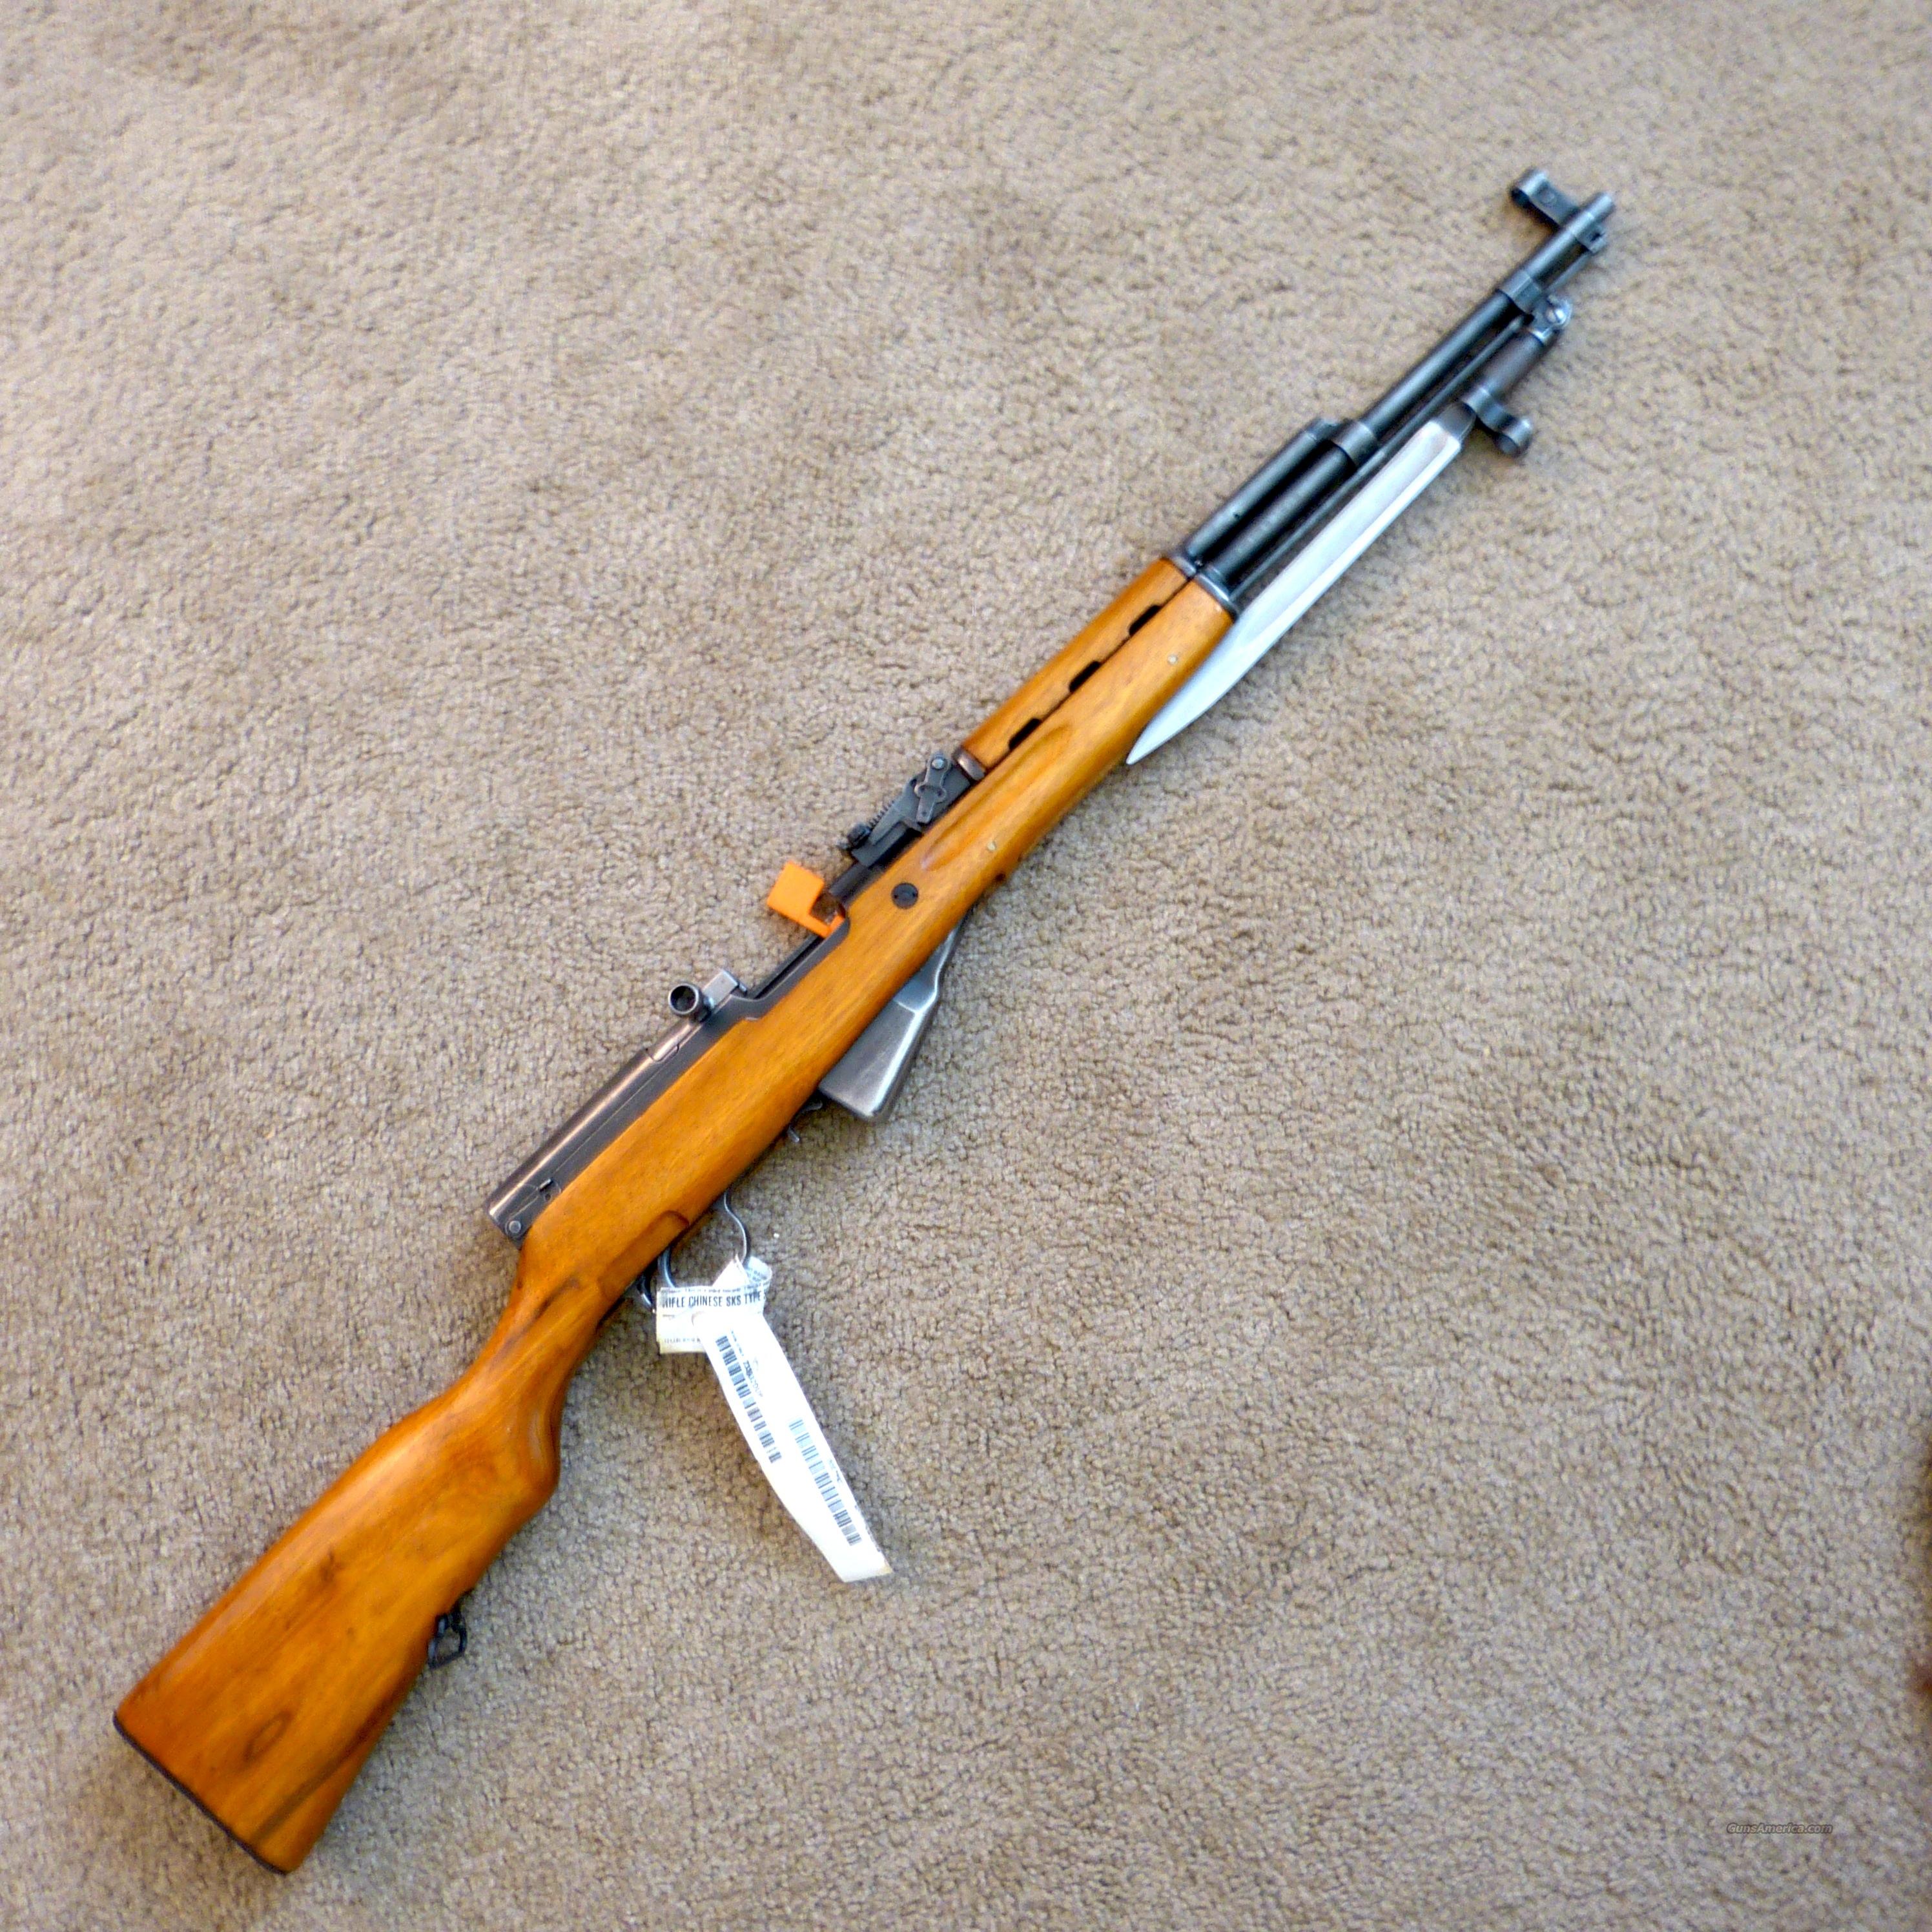 value 1956 chineese sks ghost gun serial number 7600